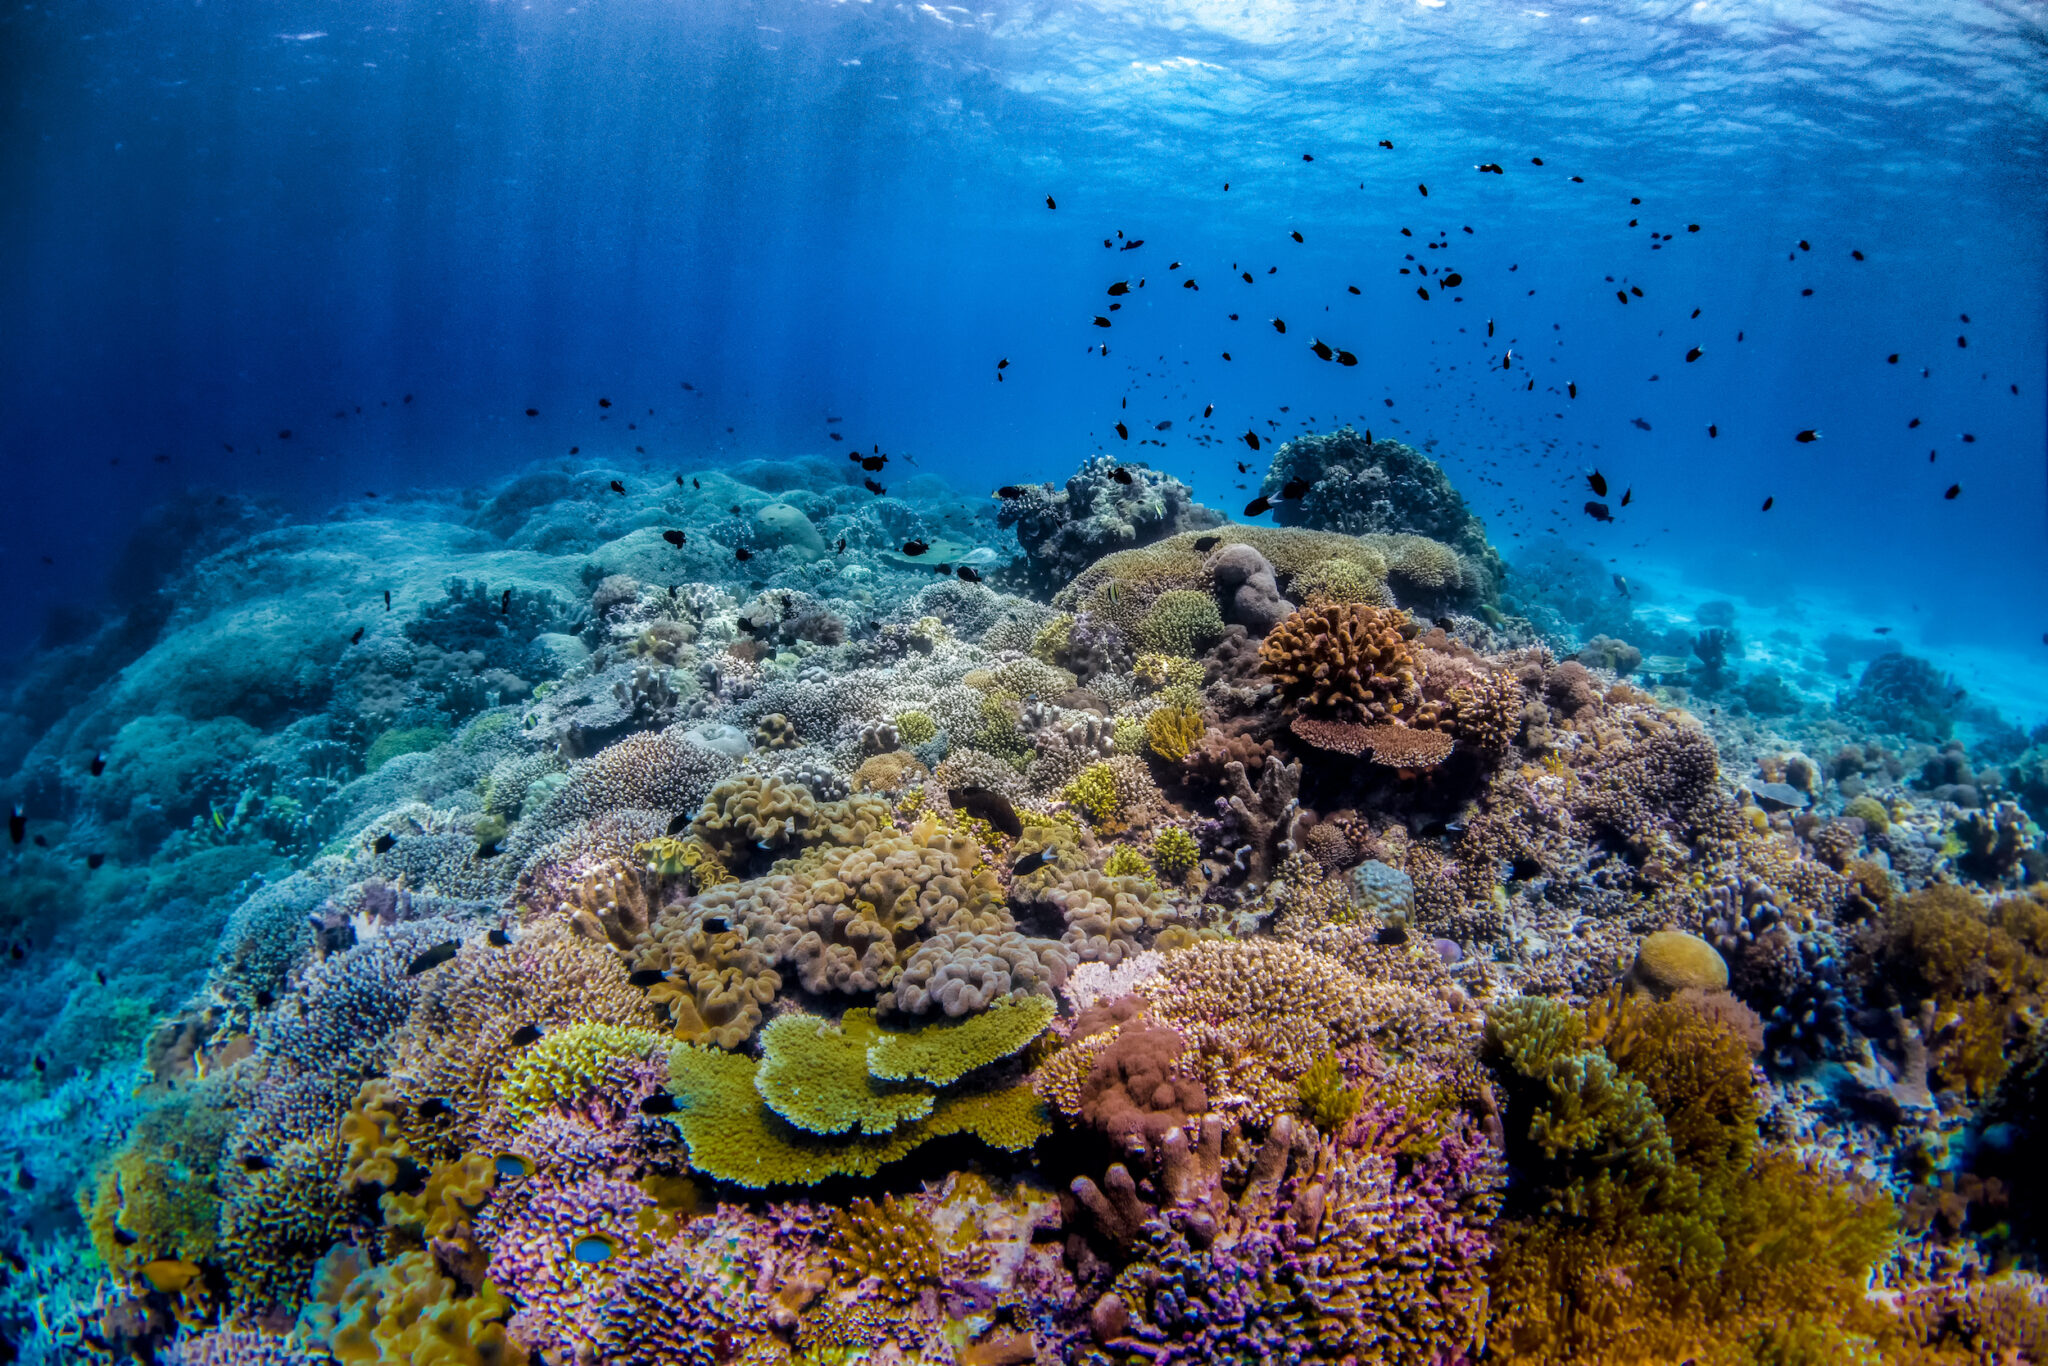 The Top 5 Scuba Diving Destinations in April - Philippines